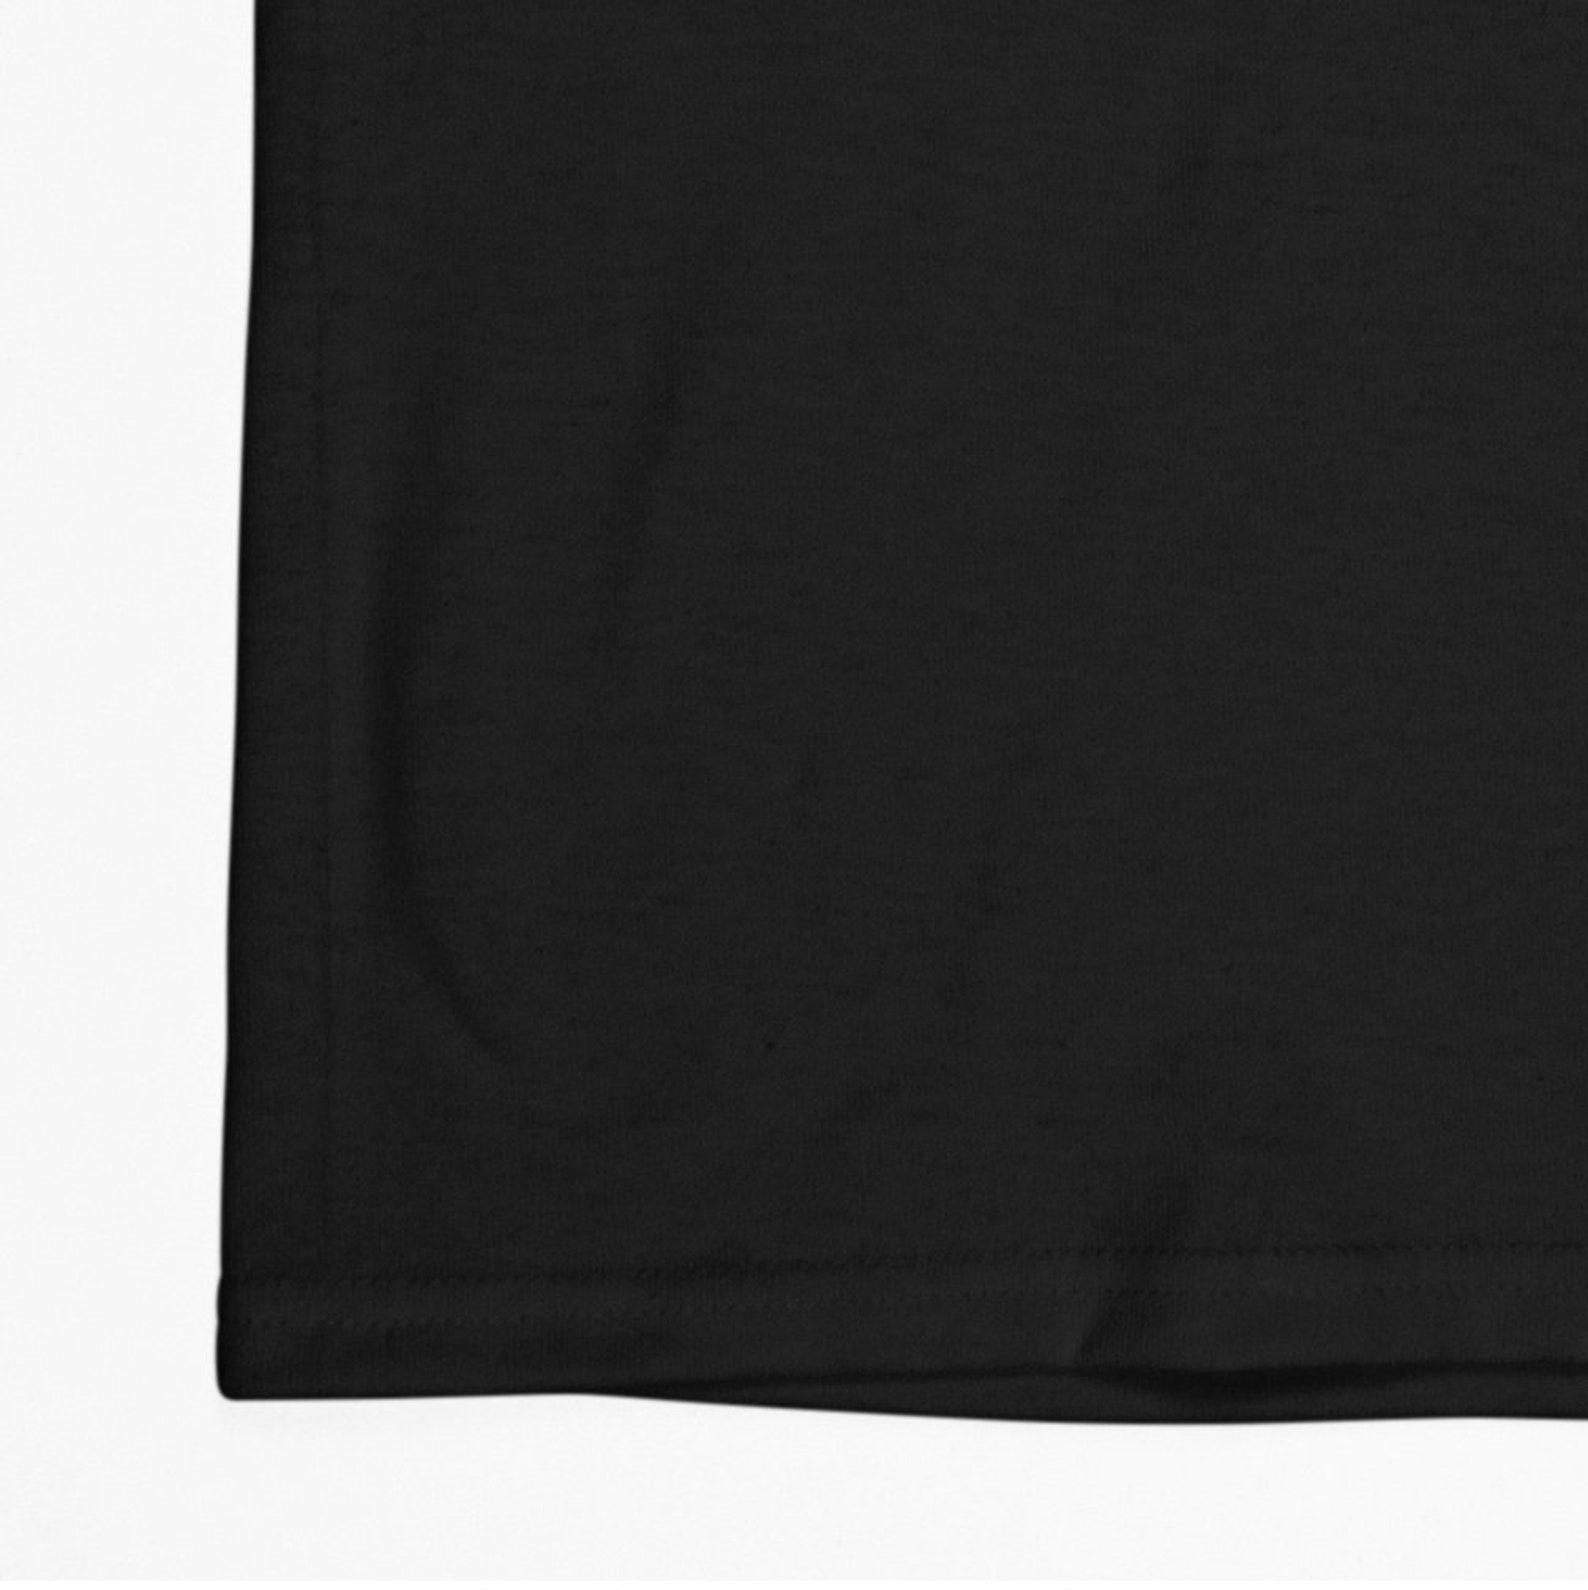 Hypnotic Universe T-shirt Alternative Clothing Grunge Shirt | Etsy